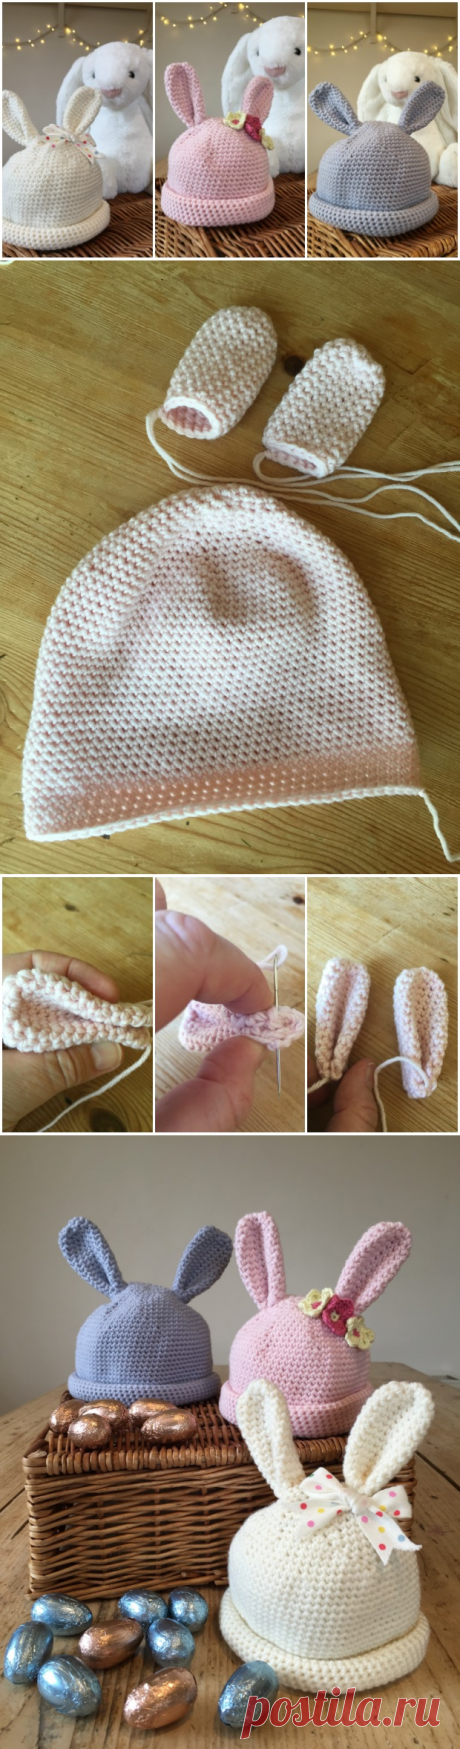 Crochet Club: Bunny hats for babies! • LoveCrochet Blog